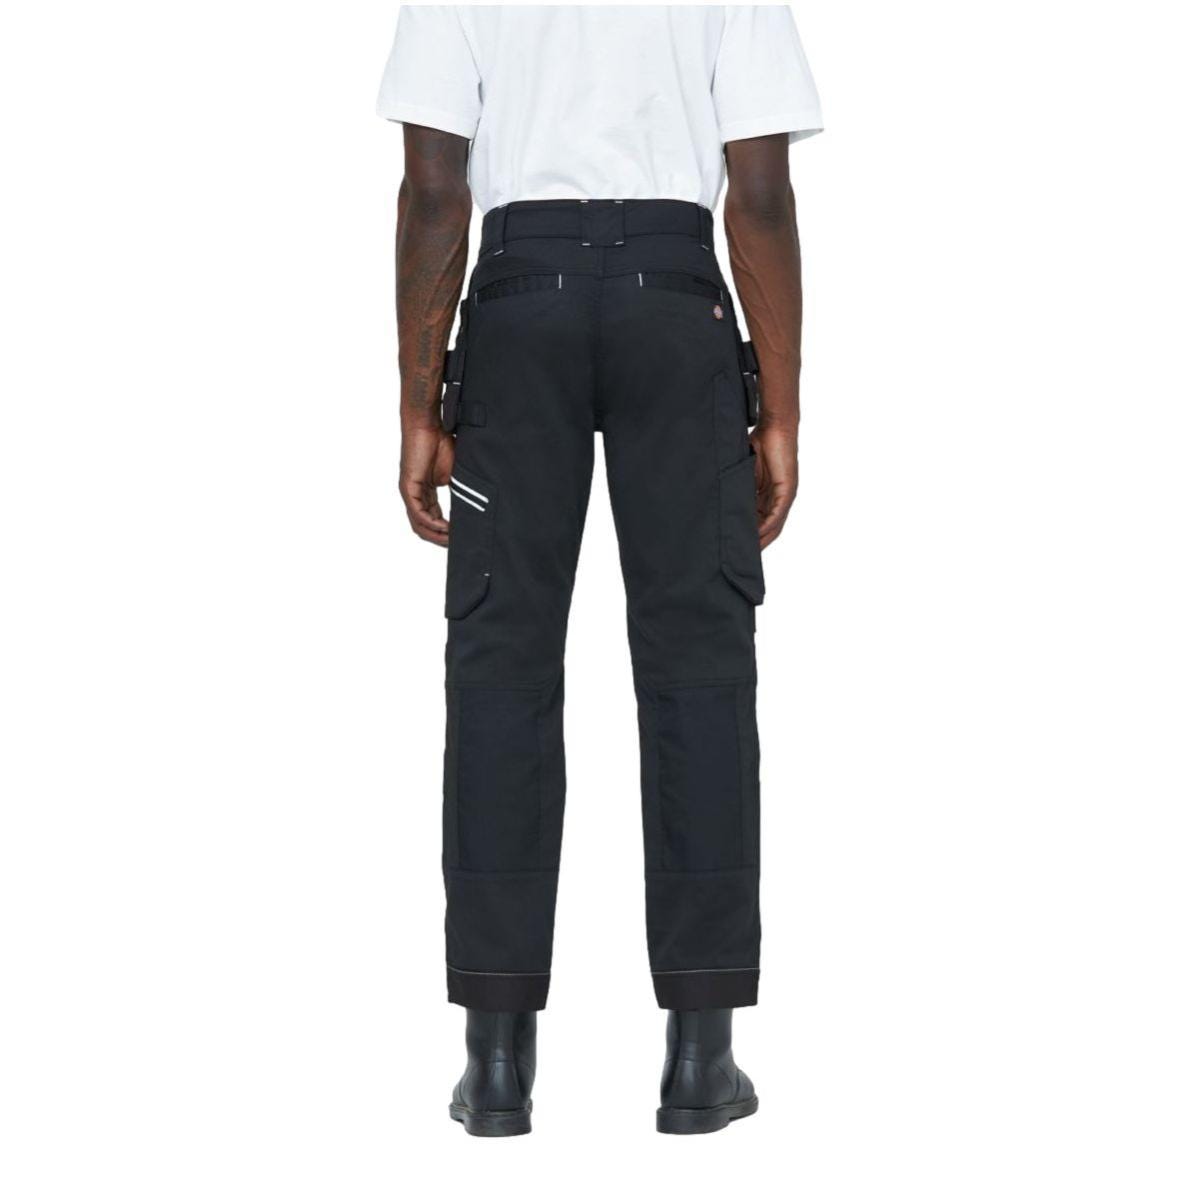 Pantalon Universal Flex Noir - Dickies - Taille 48 1